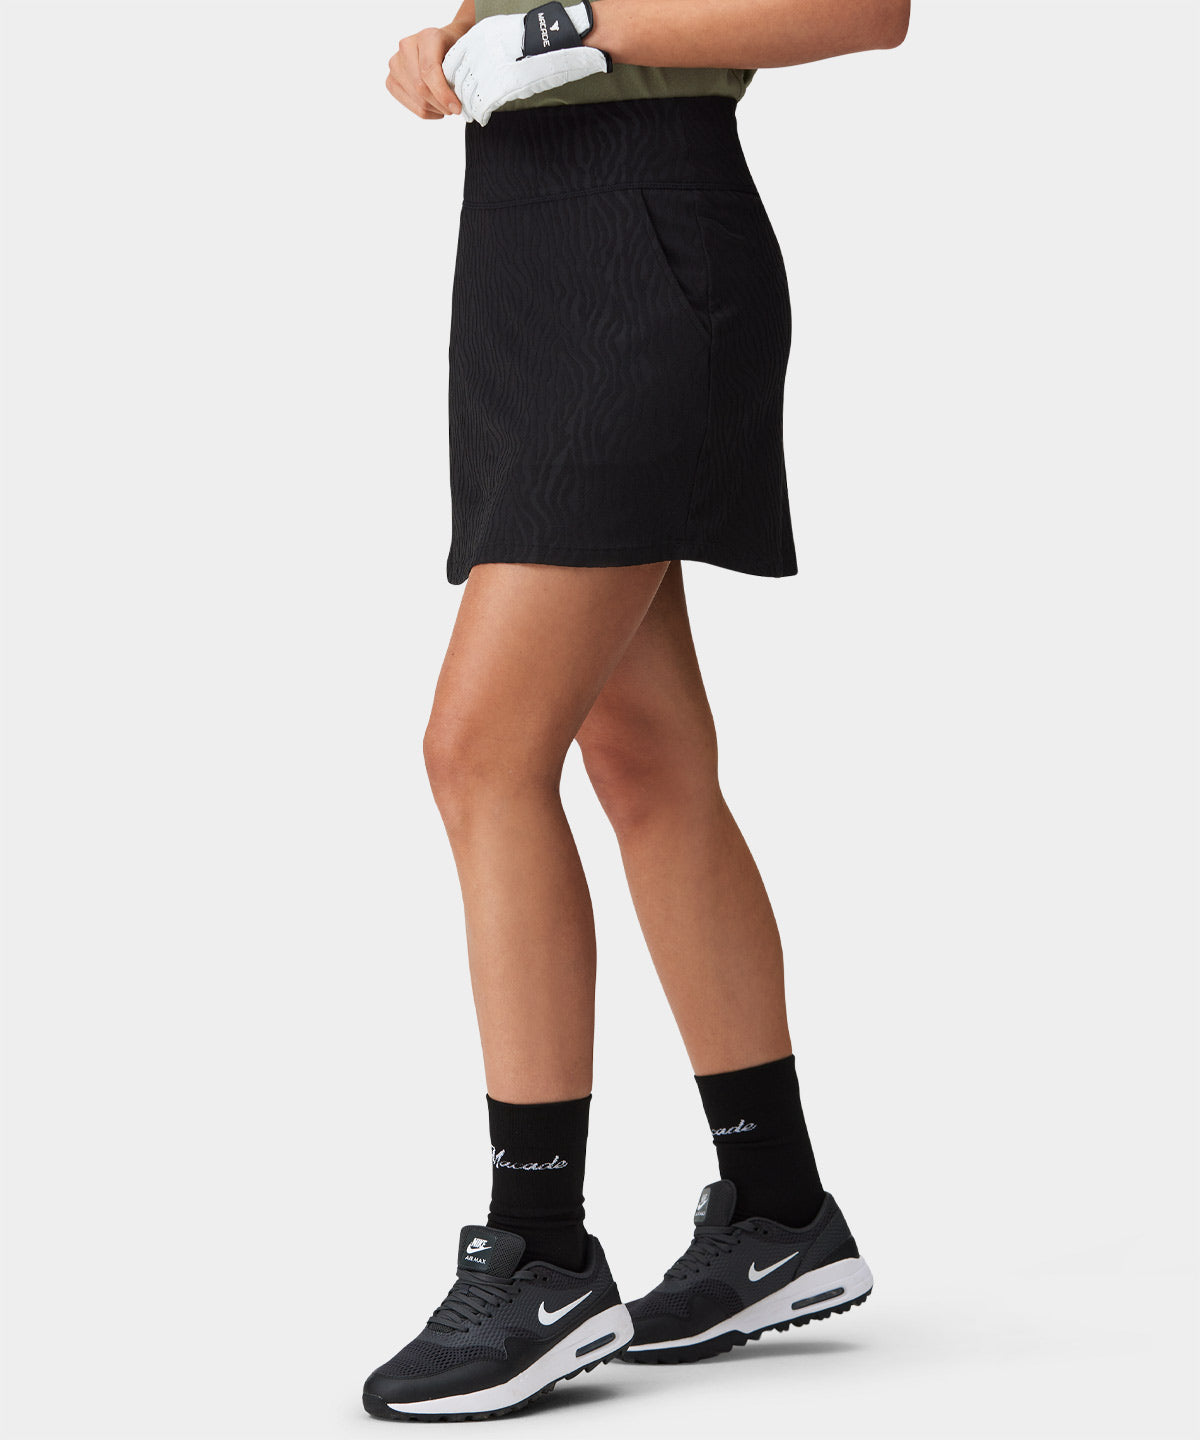 Rori Black Performance Skirt